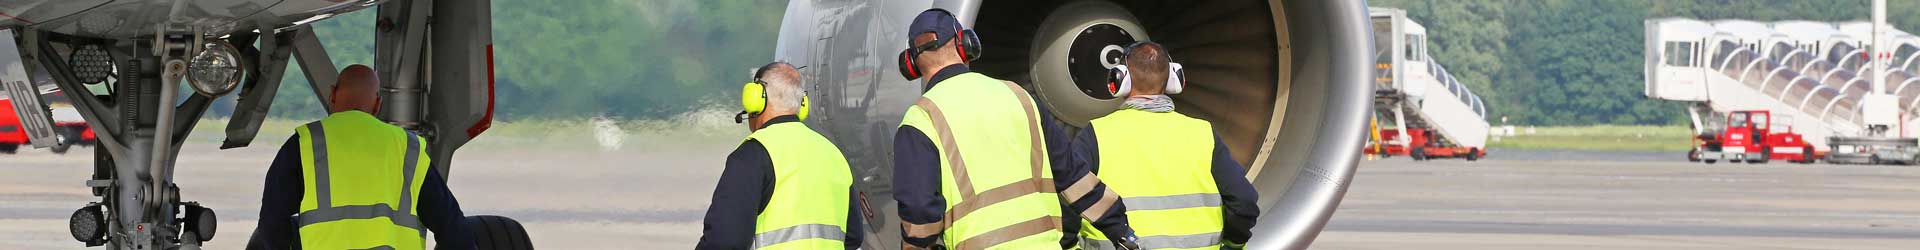 Aviation aerospace line maintenance crew working on a GENEX airliner